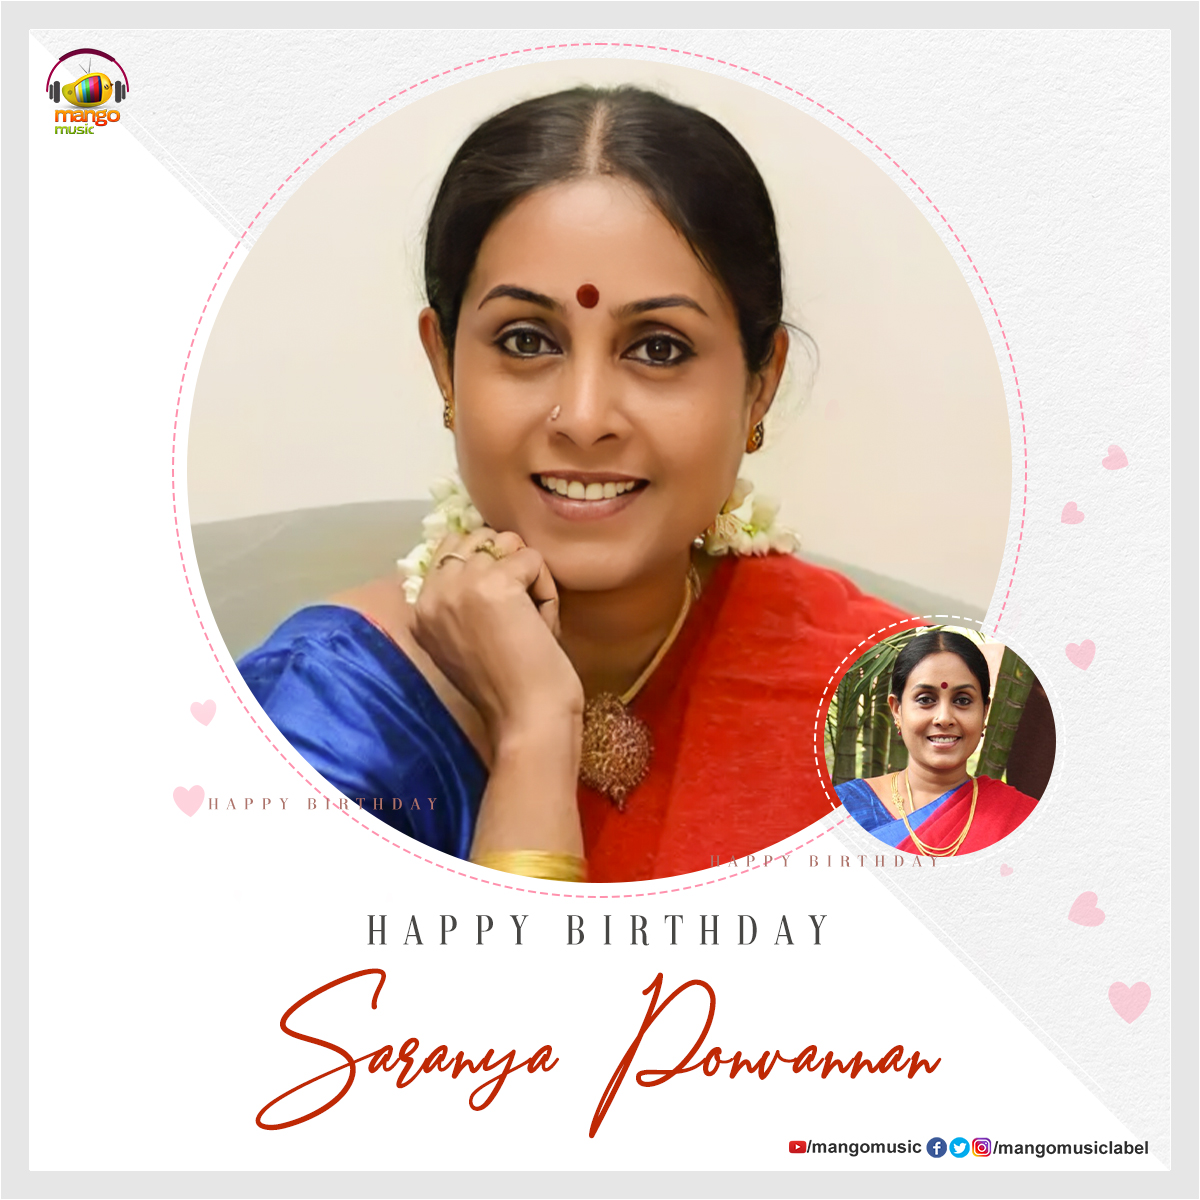 Join us in wishing the evergreen actress #SaranyaPonvannan garu a very Happy Birthday! 🎉 Wishing you good health and happiness always! 💕 #HappyBirthdaySaranyaPonvannan #HBDSaranyaPonvannan #Tollywood #MangoMusic